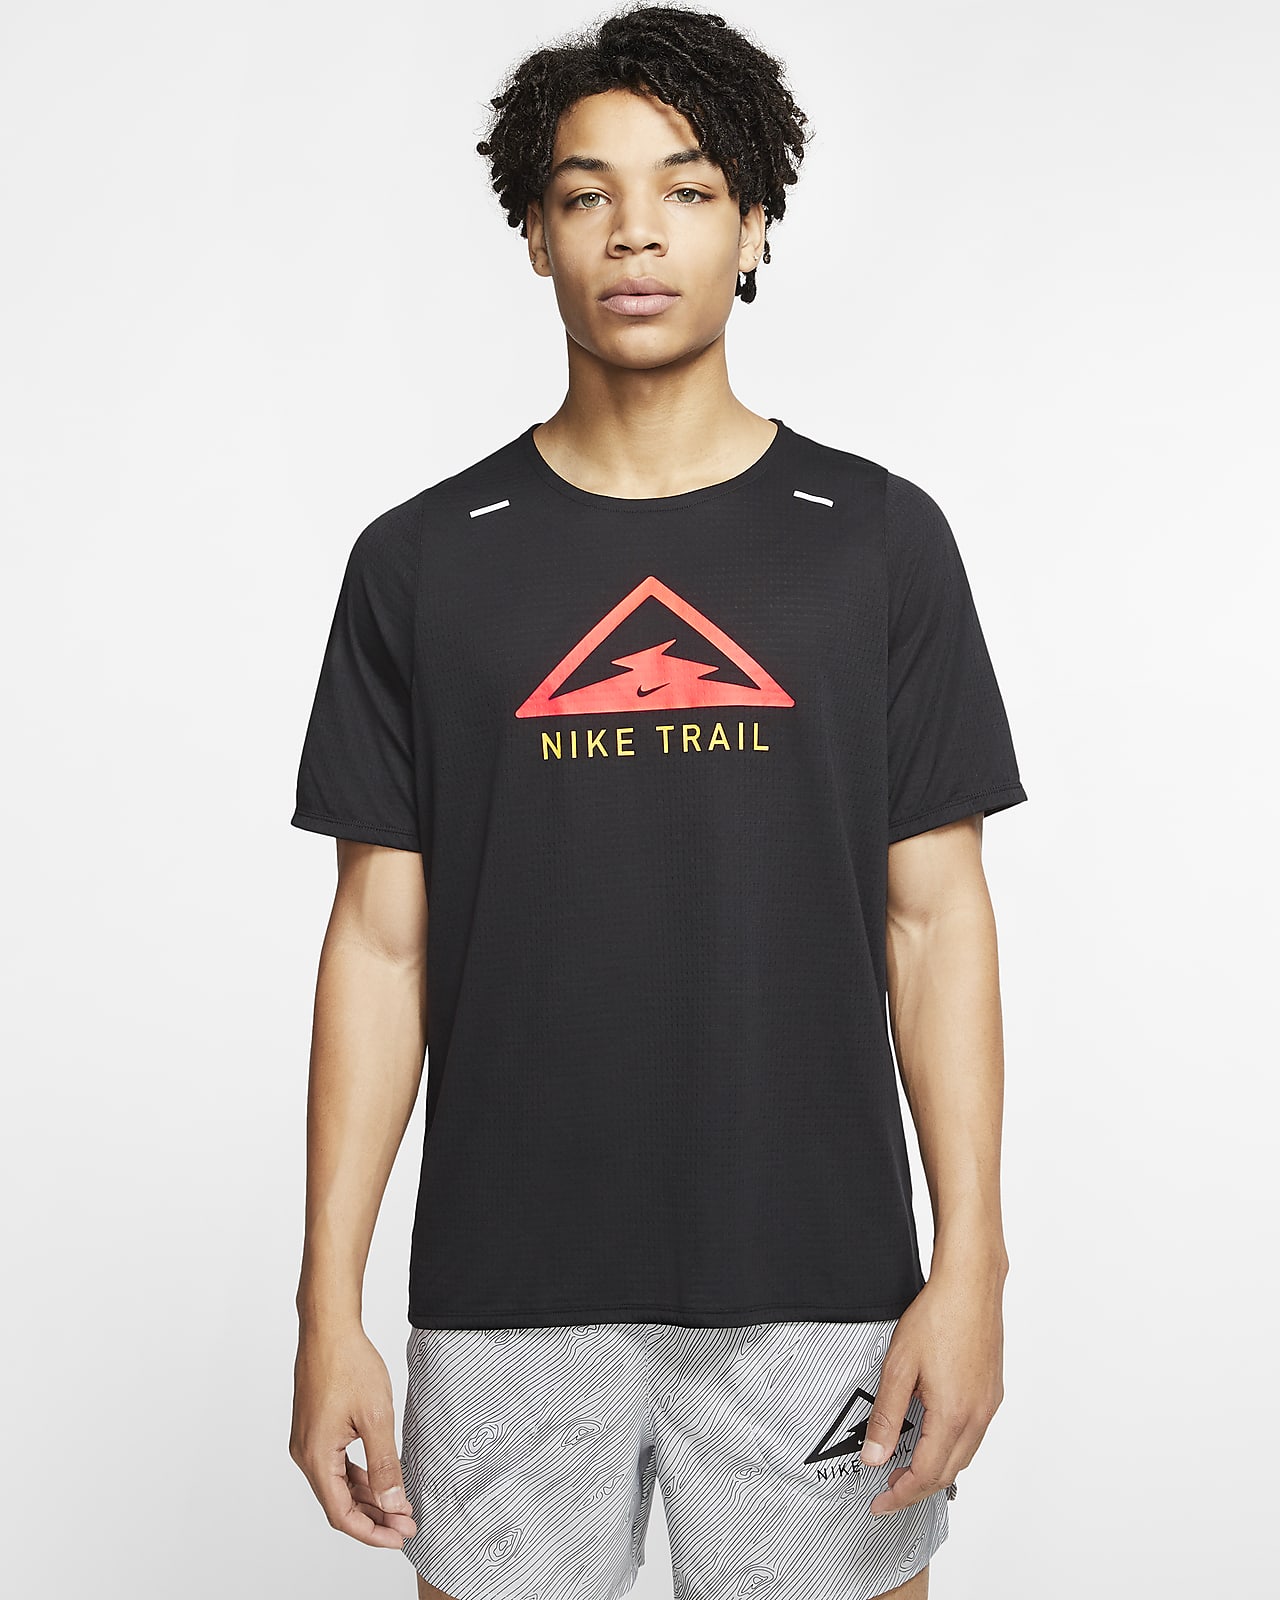 nike trail t shirt